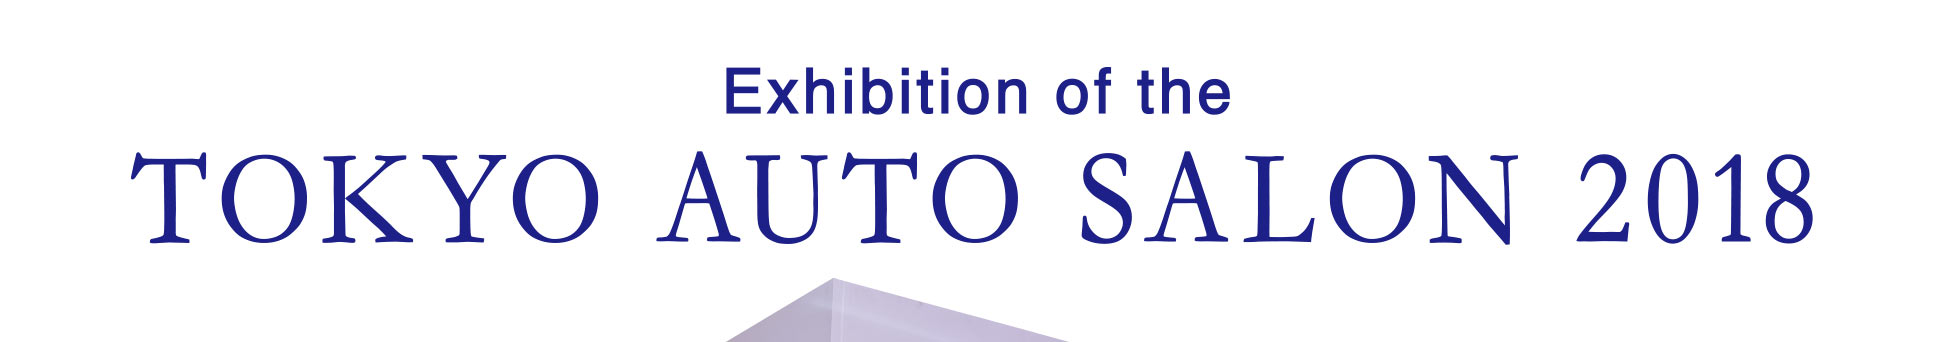 Exhibition of the TOKYO AUTO SALON 2018